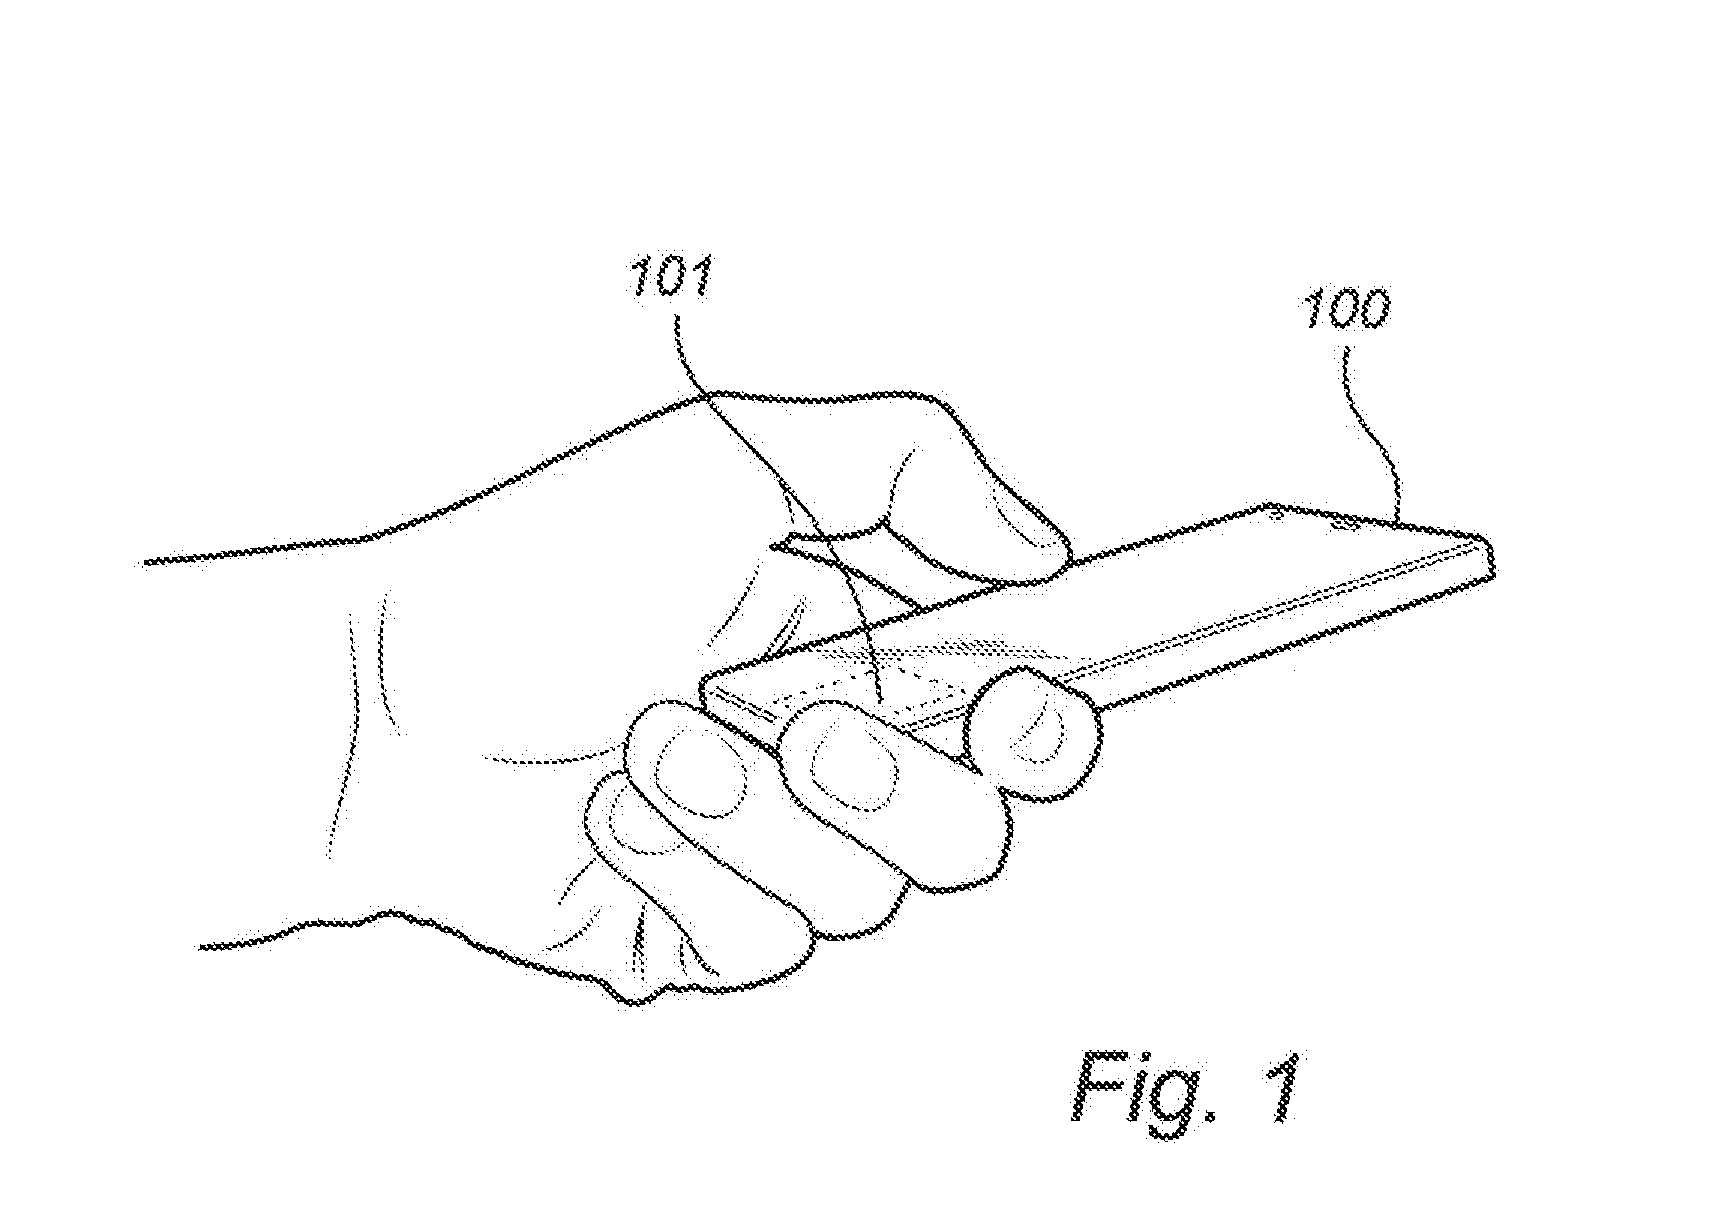 Connection pads for a fingerprint sensing device